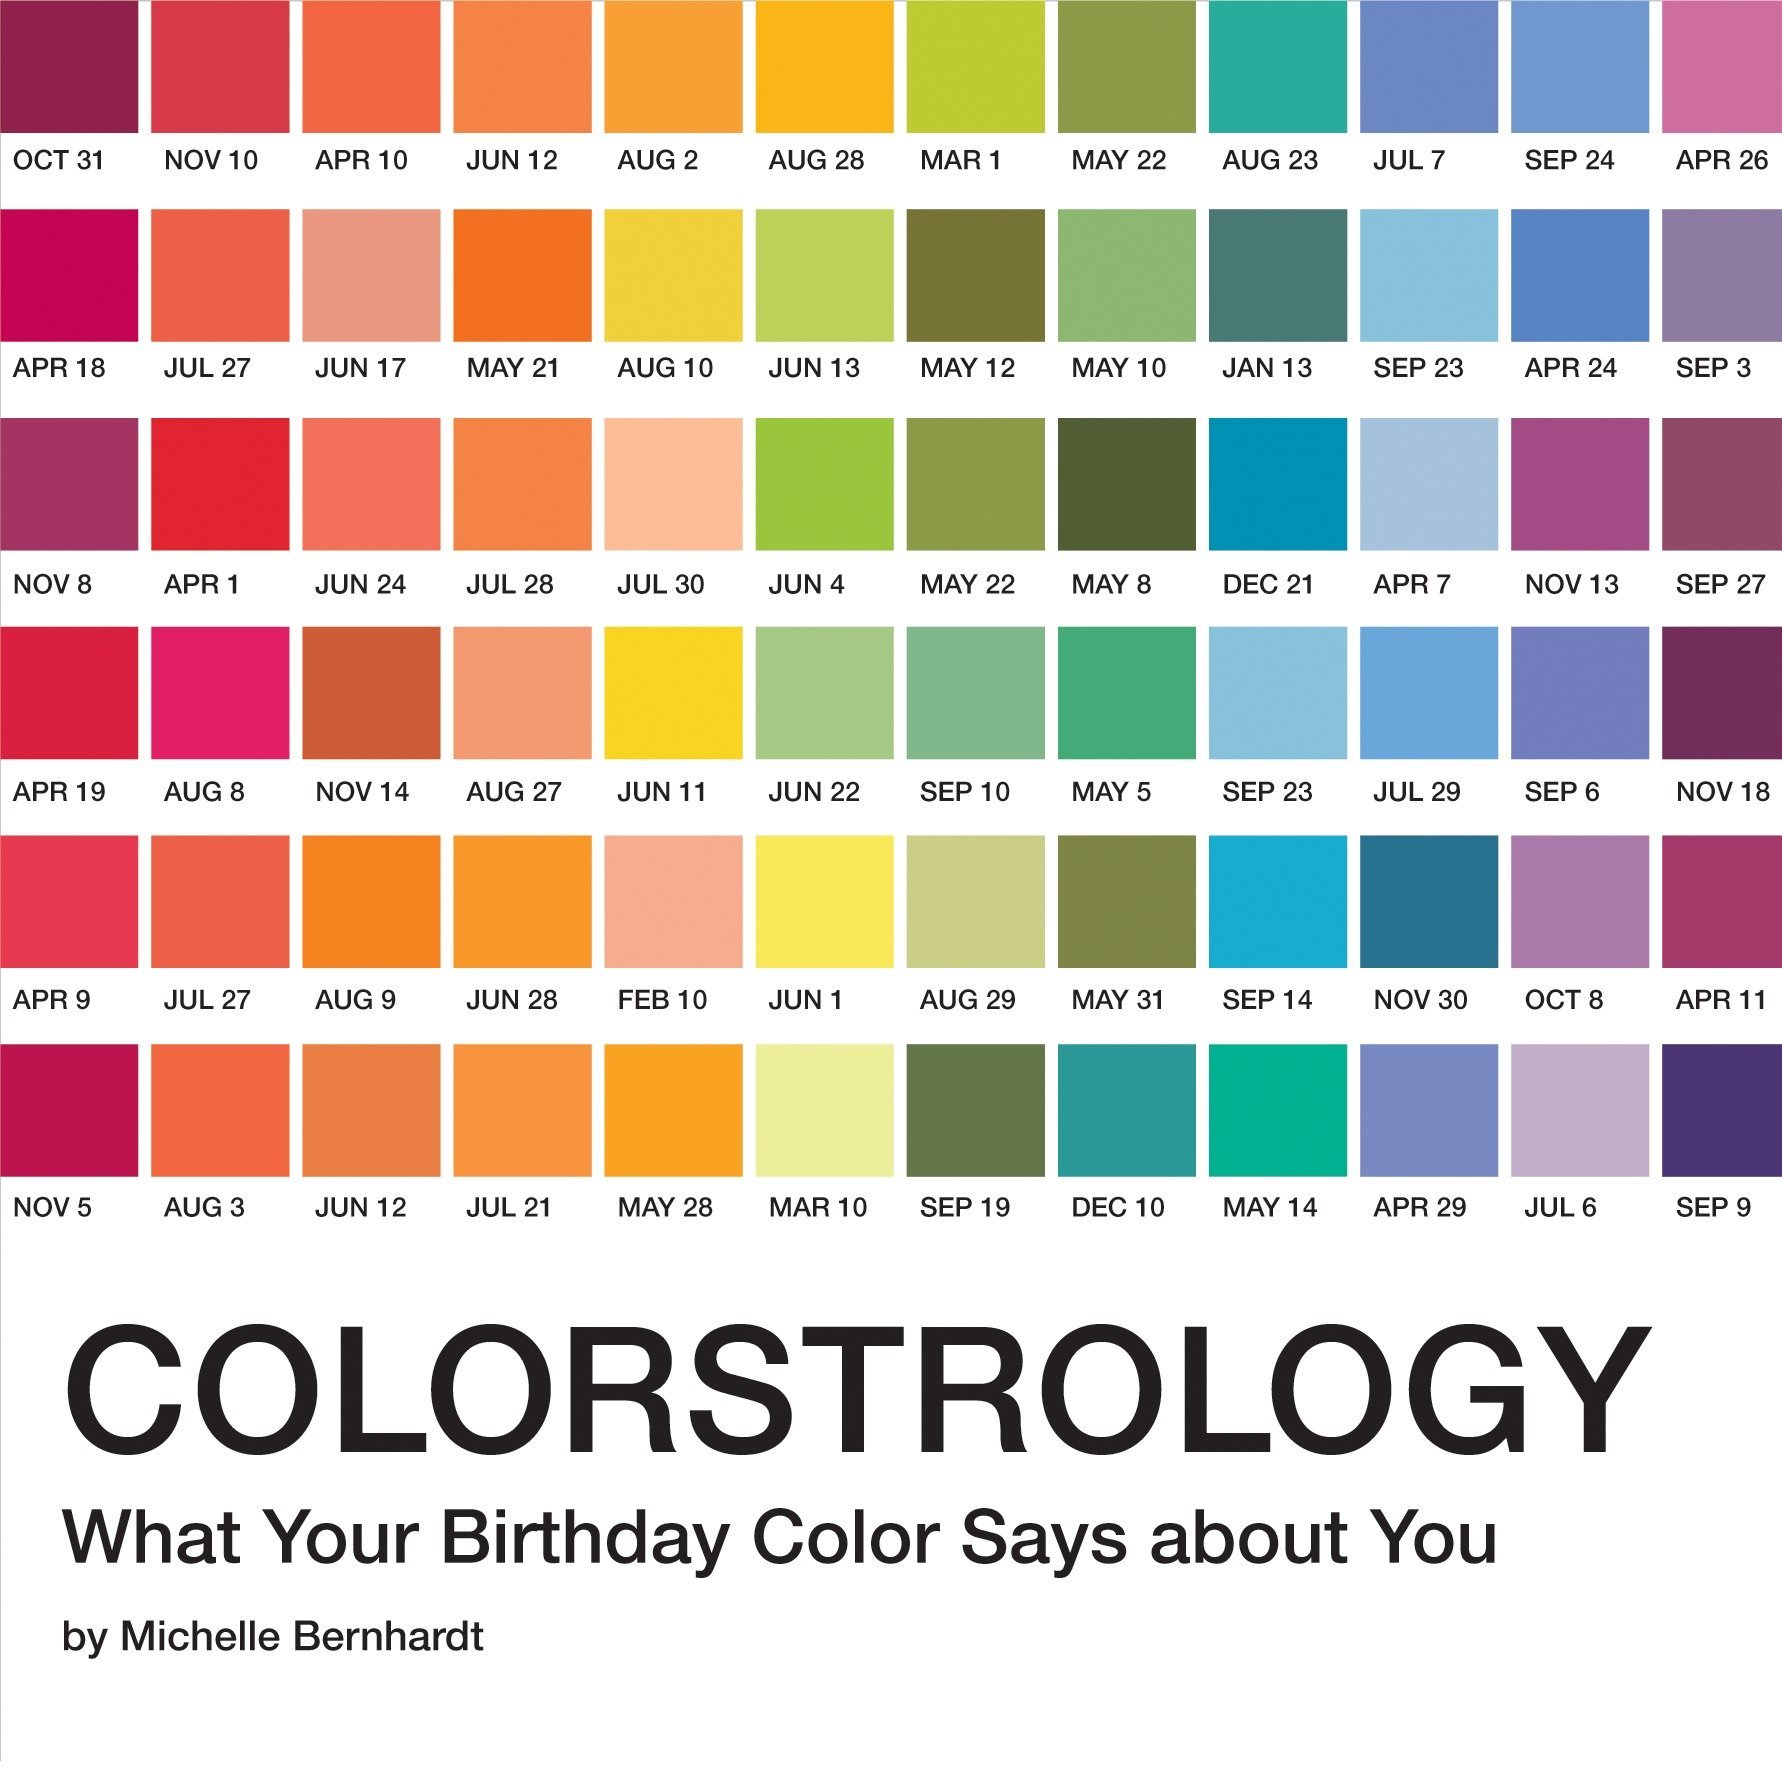 Colorstrology birthday book